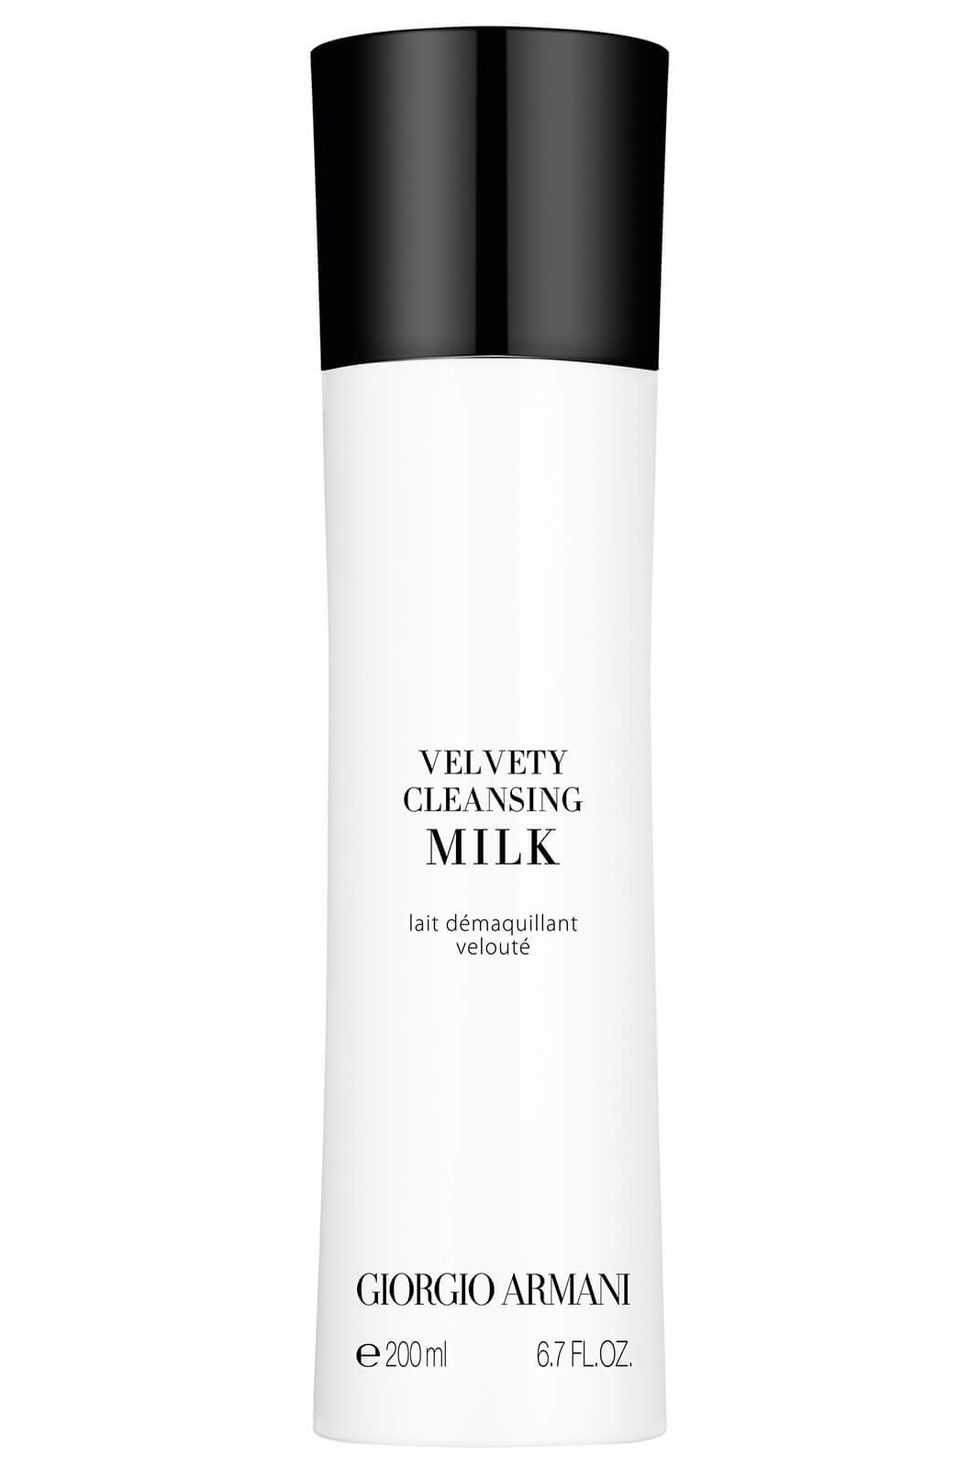 Velvety Cleansing Milk